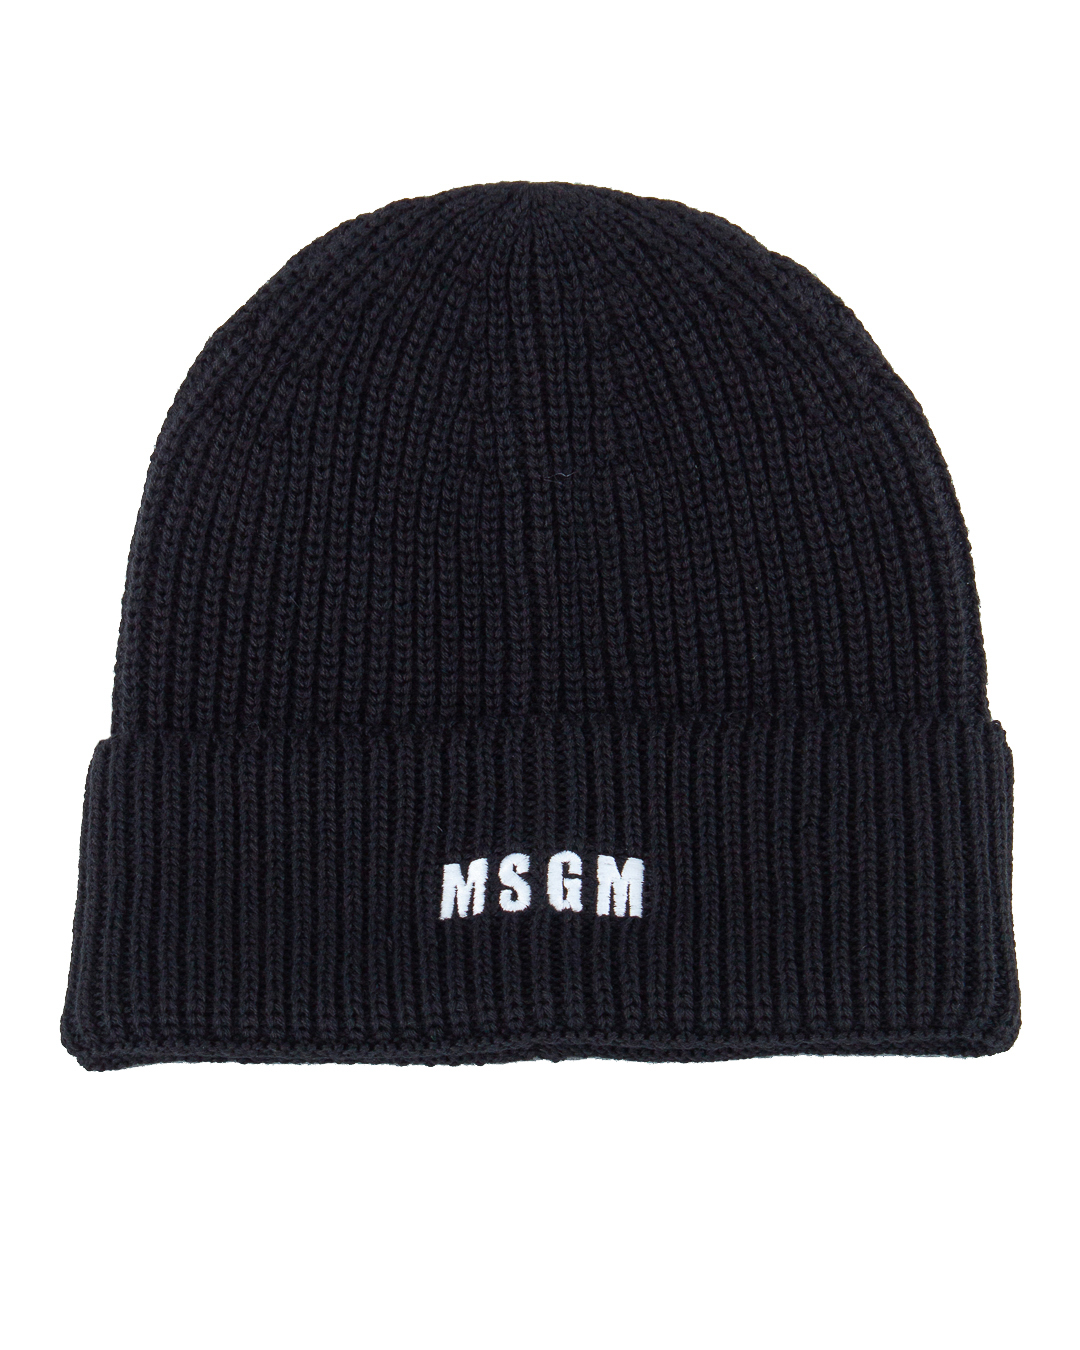 шапка MSGM 3541MDL08 черный UNI, размер UNI